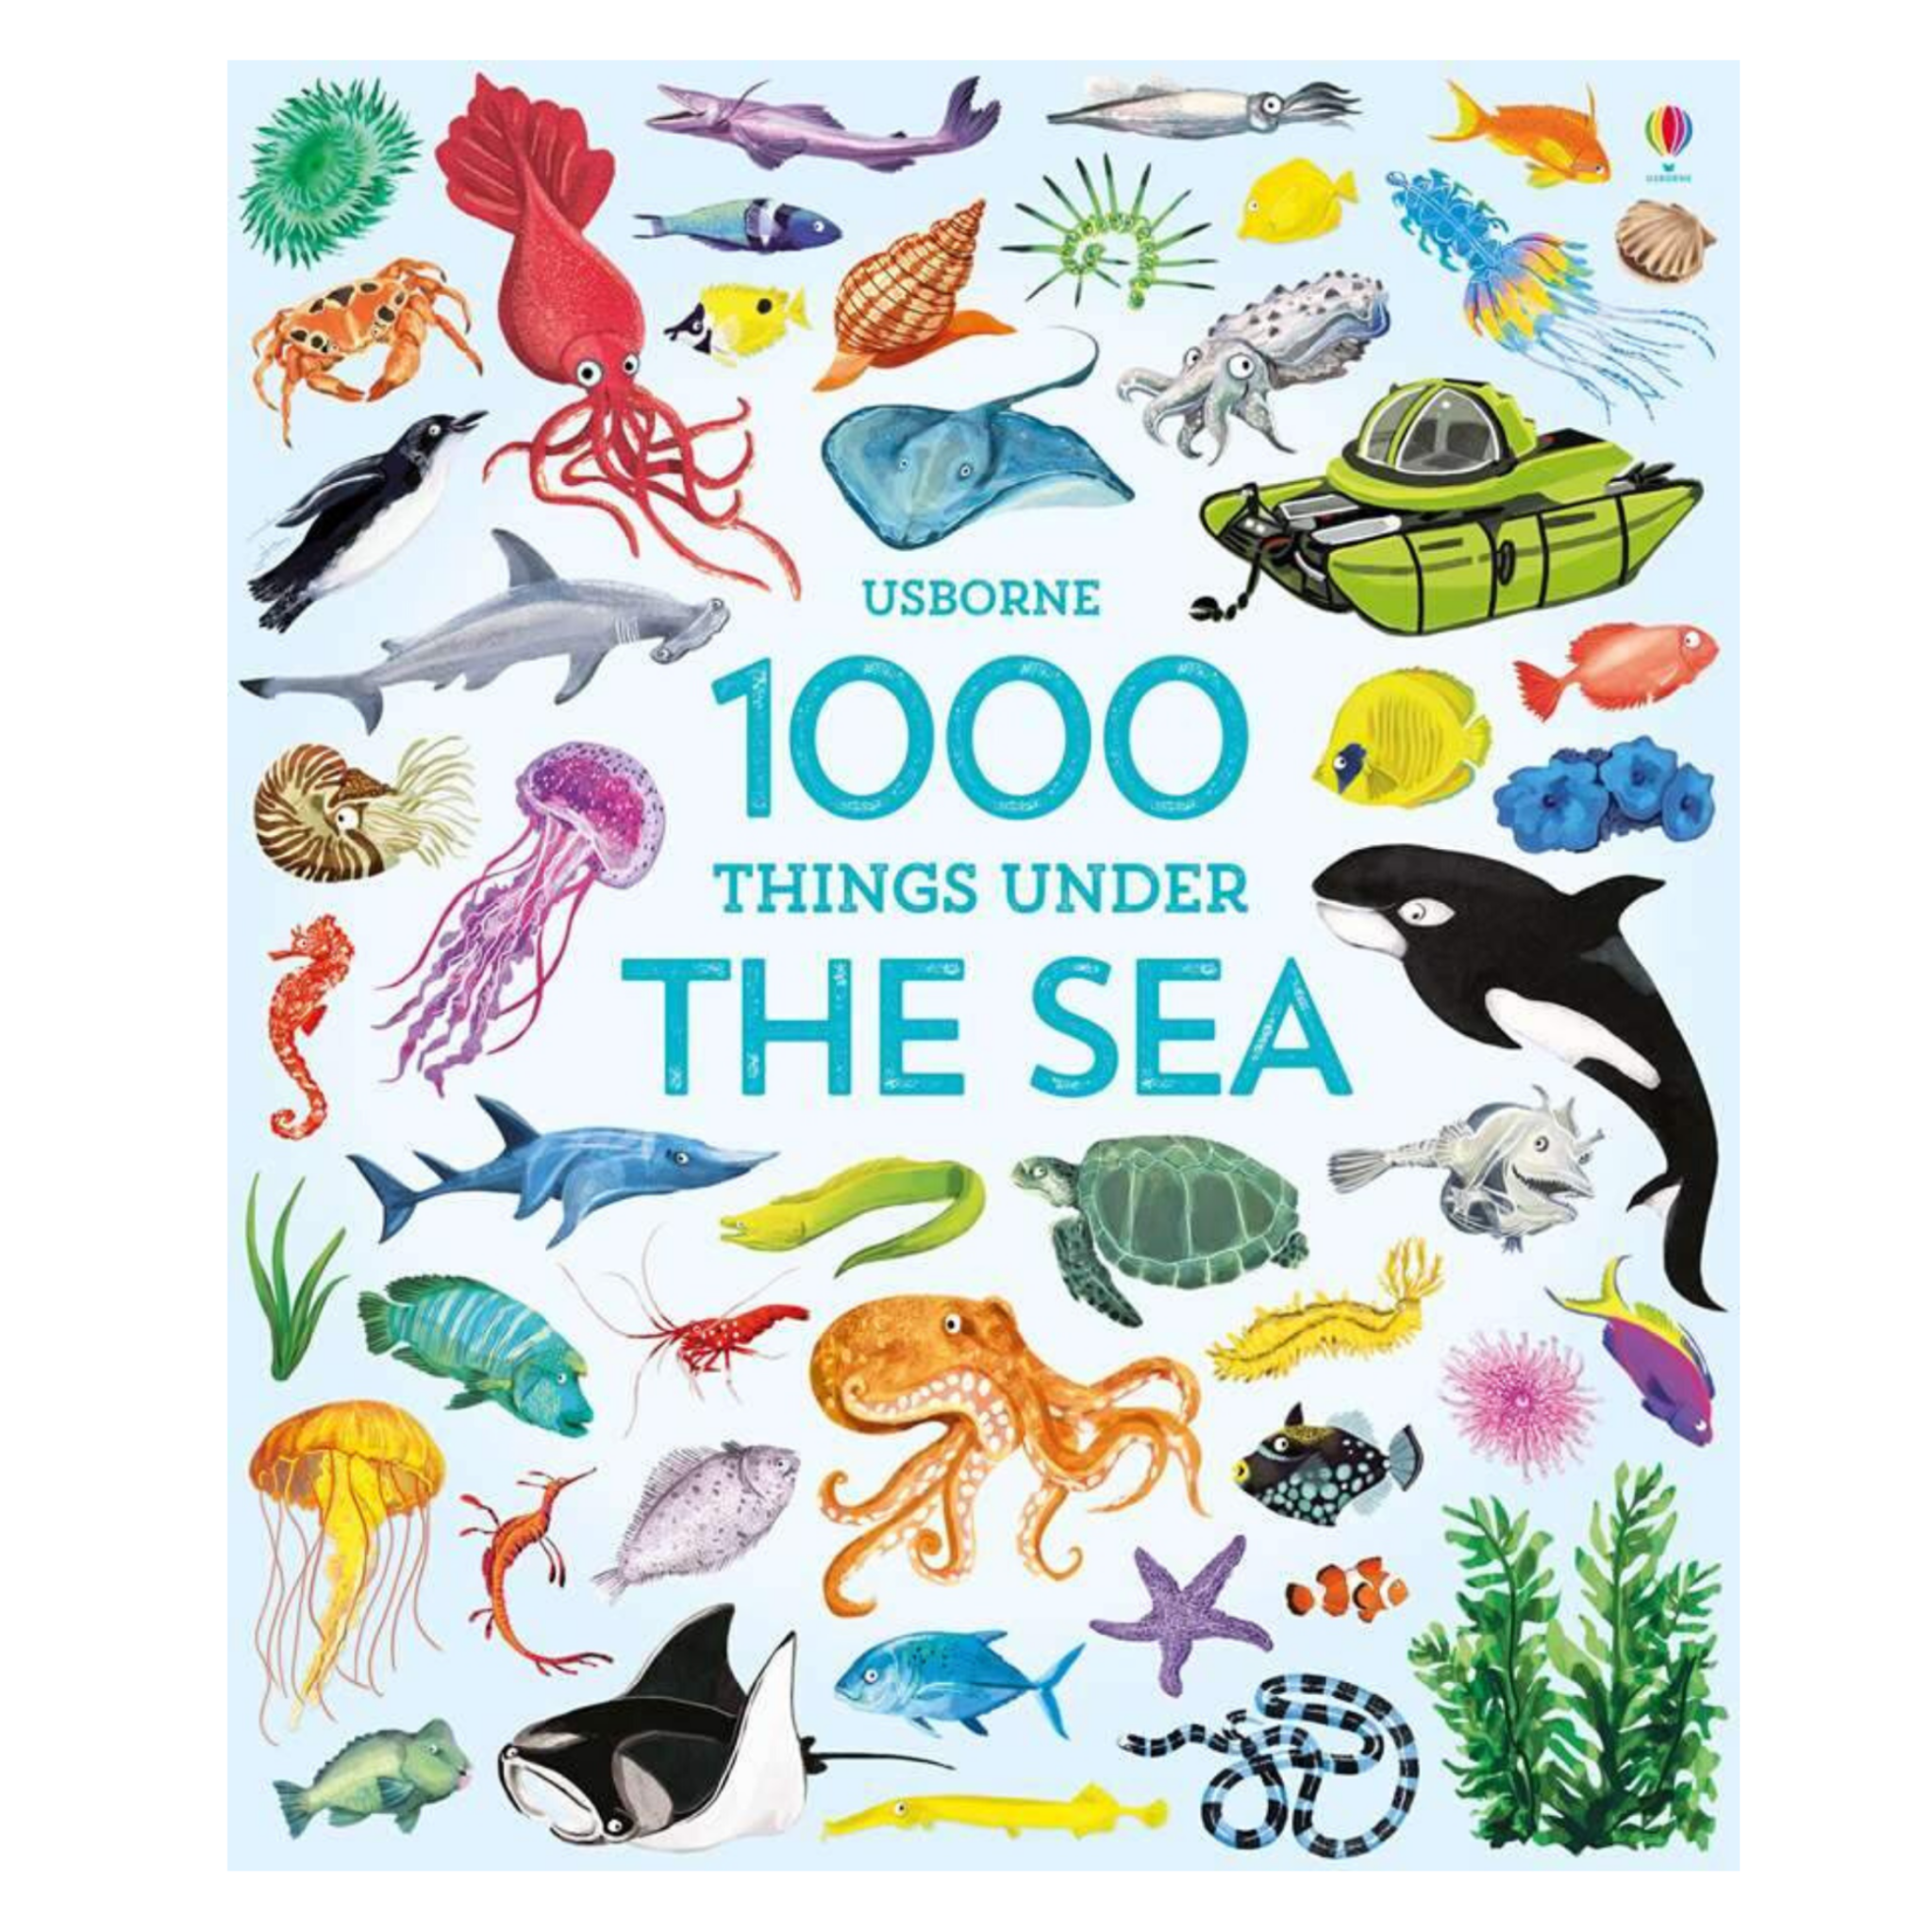 Usborne Books "1000 Things Under the Sea" children's book